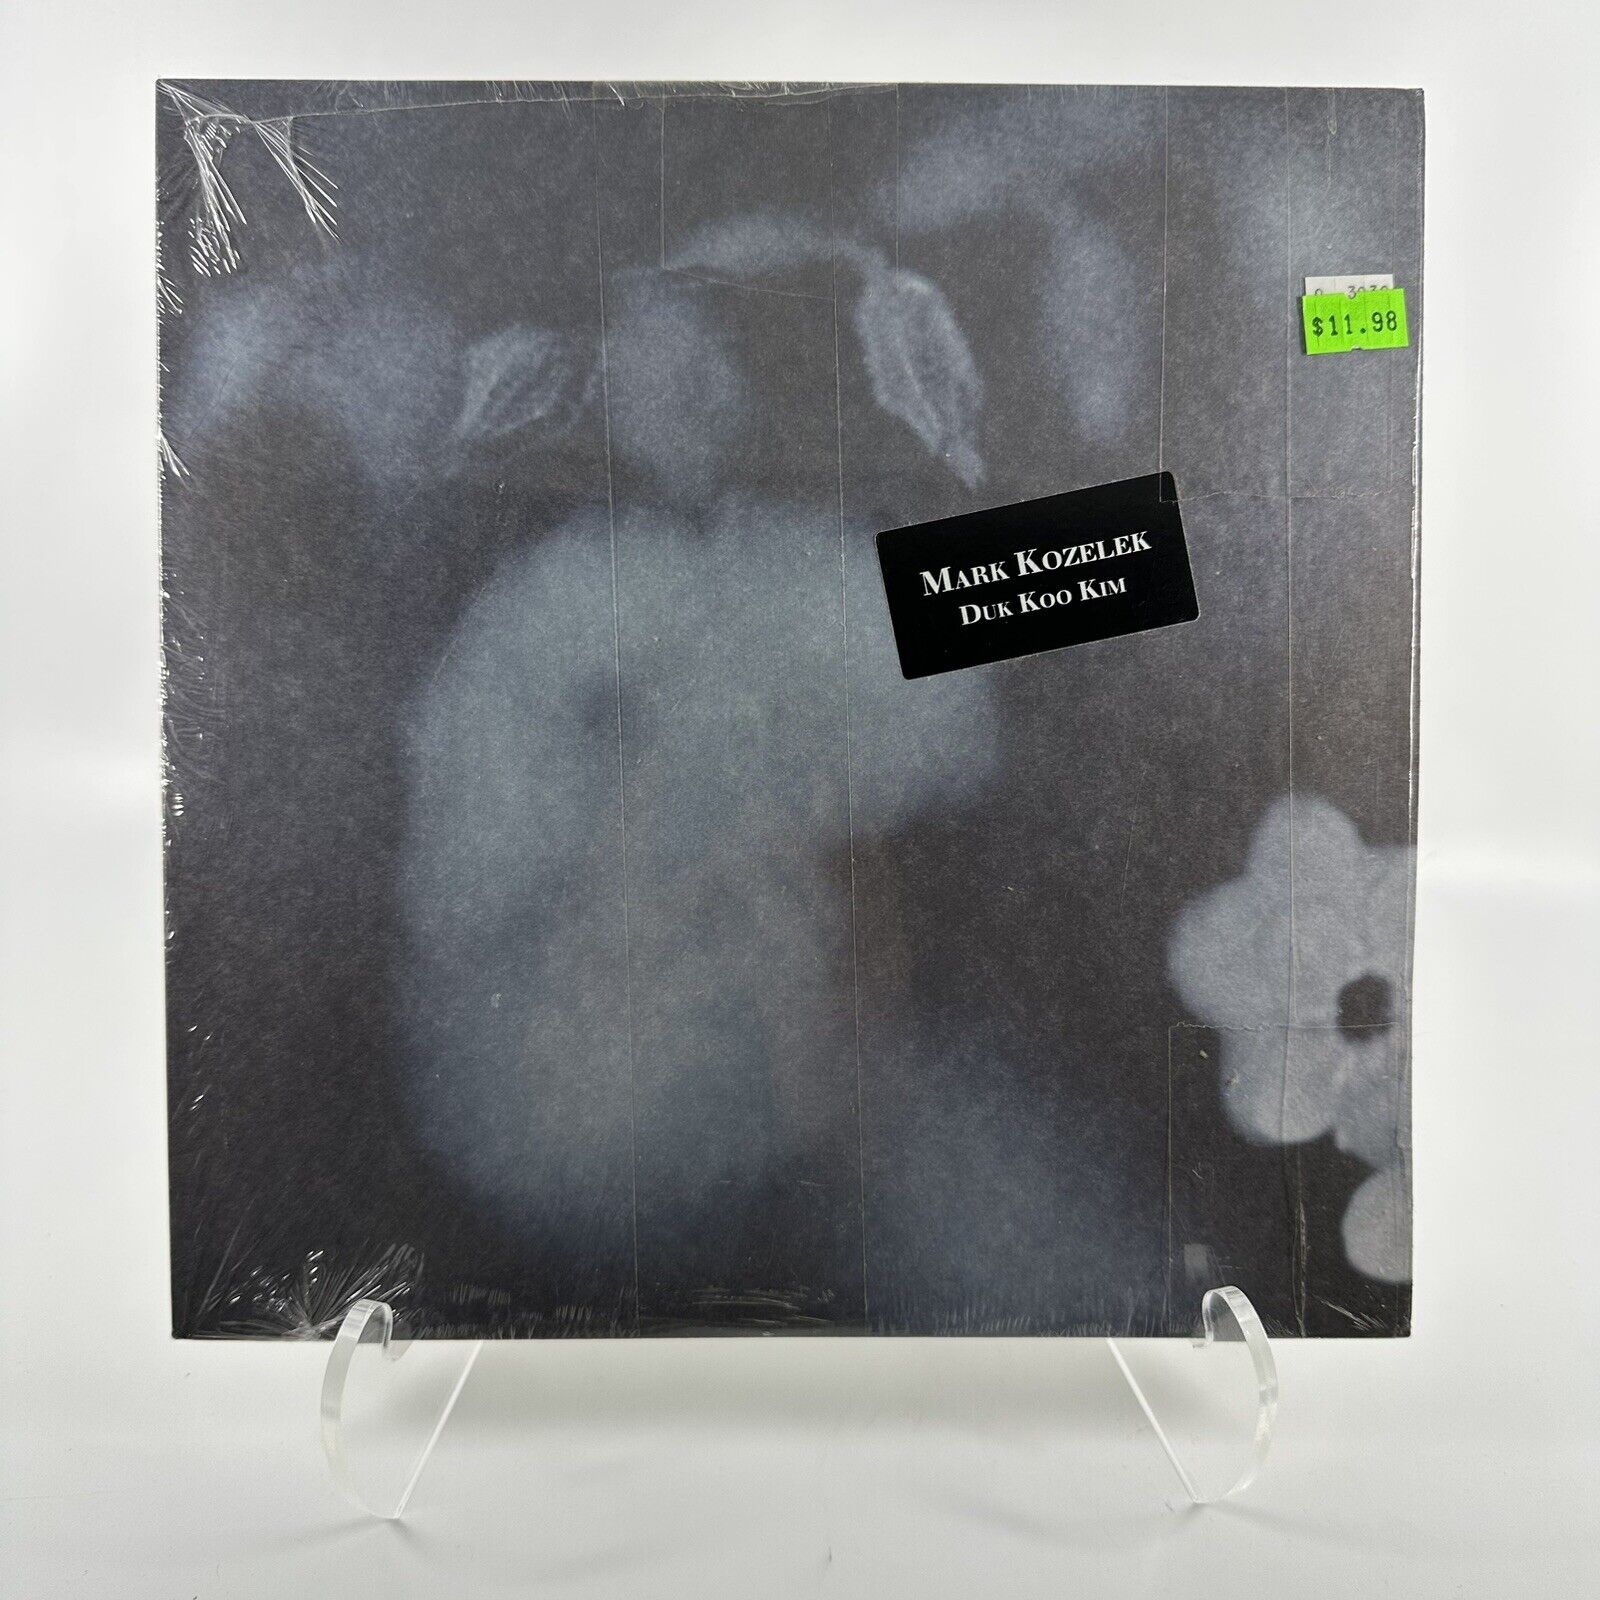 Mark Kozelek Duk Koo Kim Vinyl 10” Limited Edition #20 Signed Print #1/50